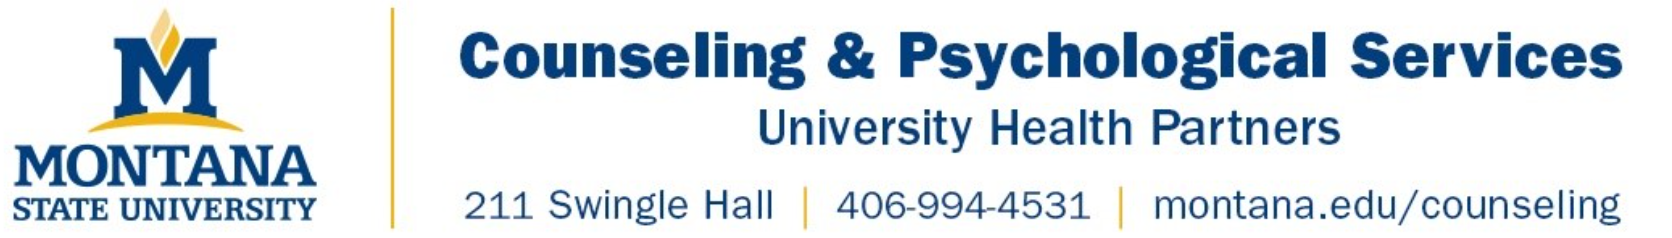 Montana State University. Counseling and Psychological Services. University Health Partners. 211 Swingle Hall. 406-994-4531. montana.edu/counseling.